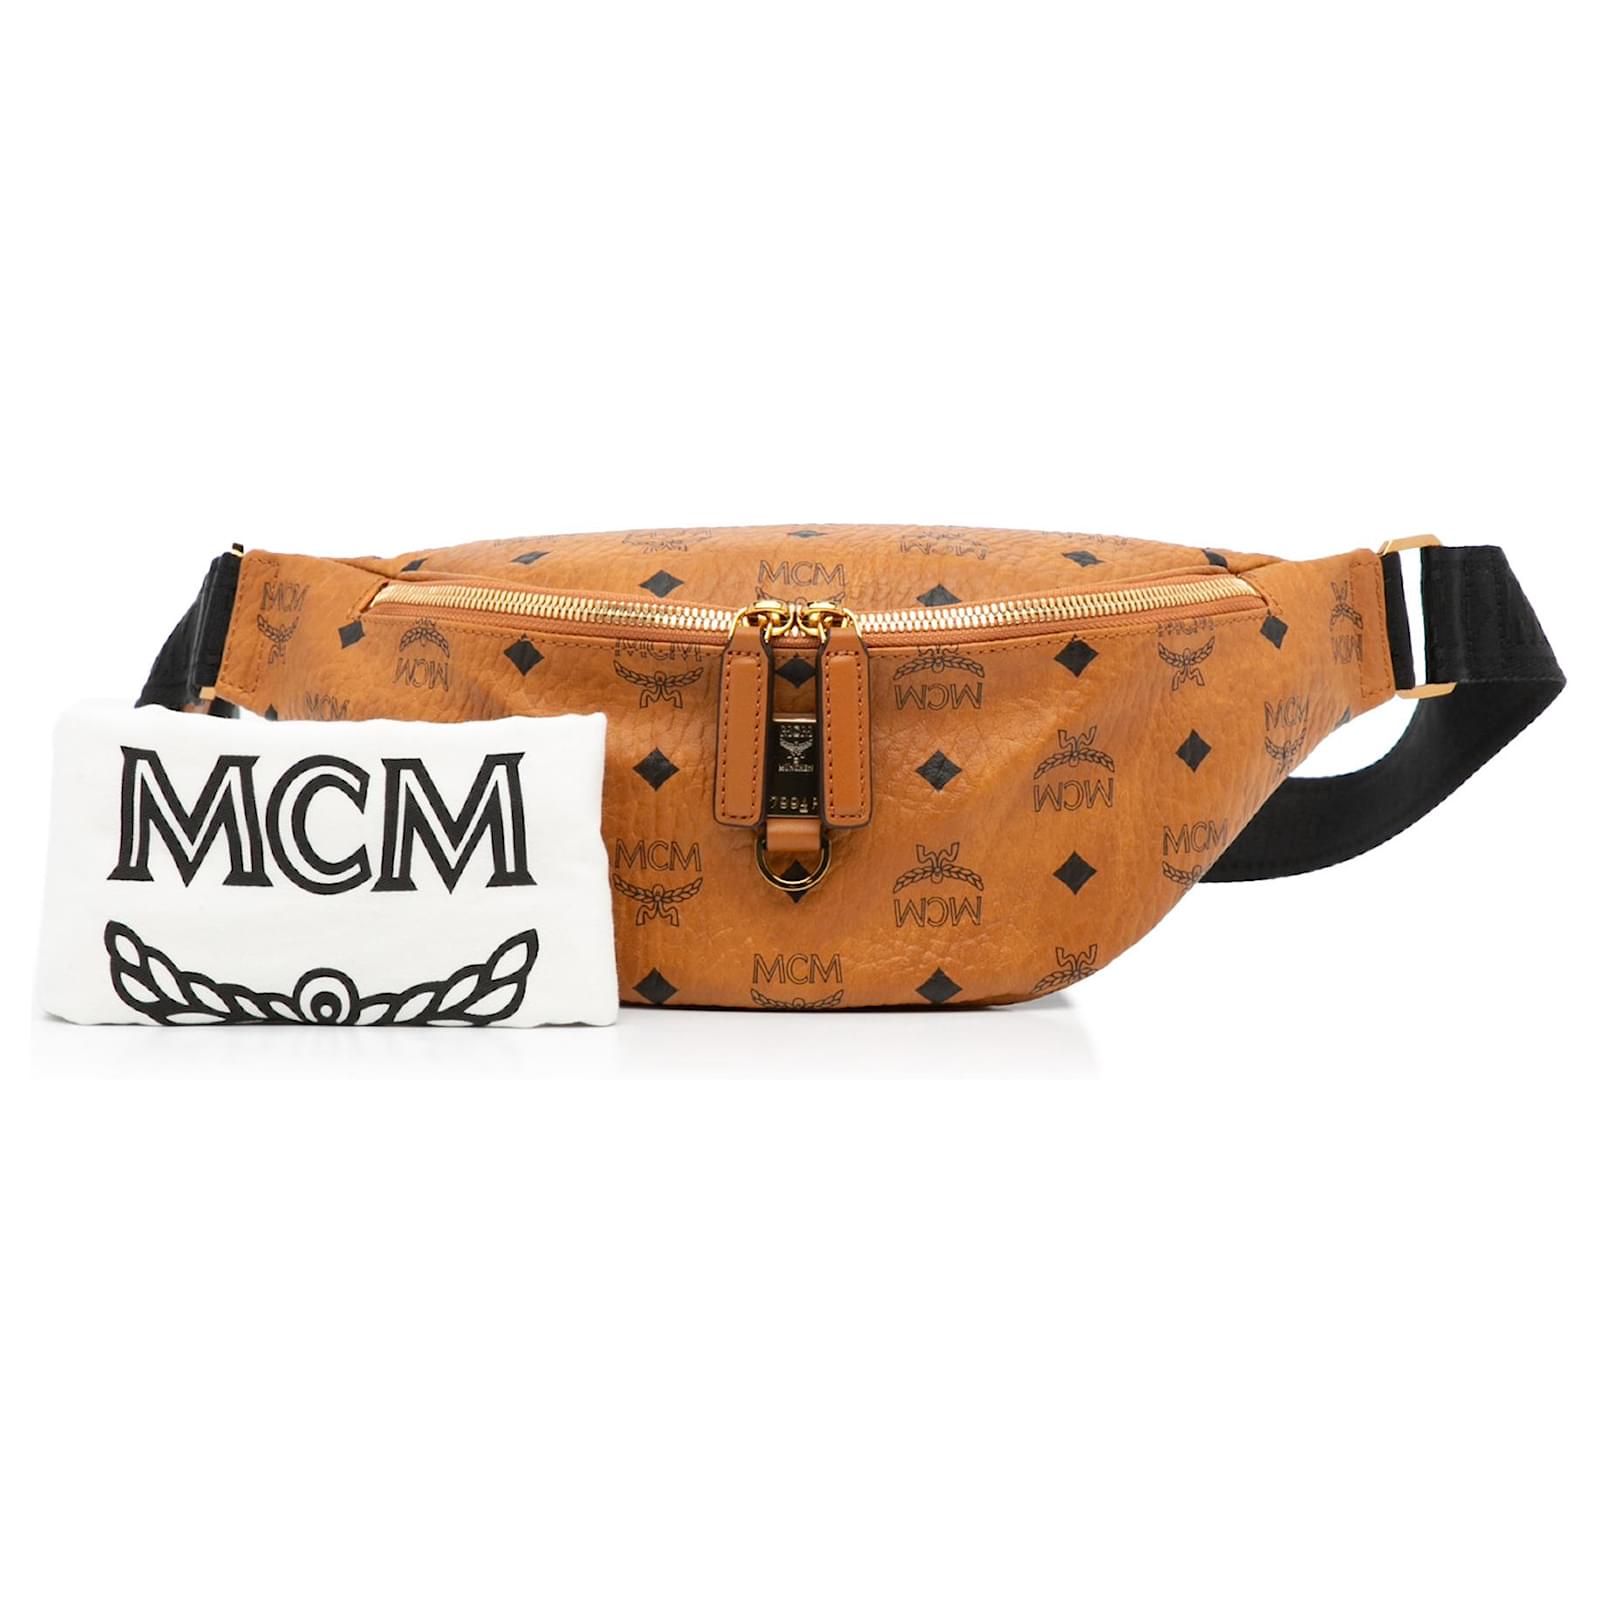 mcm belt bag